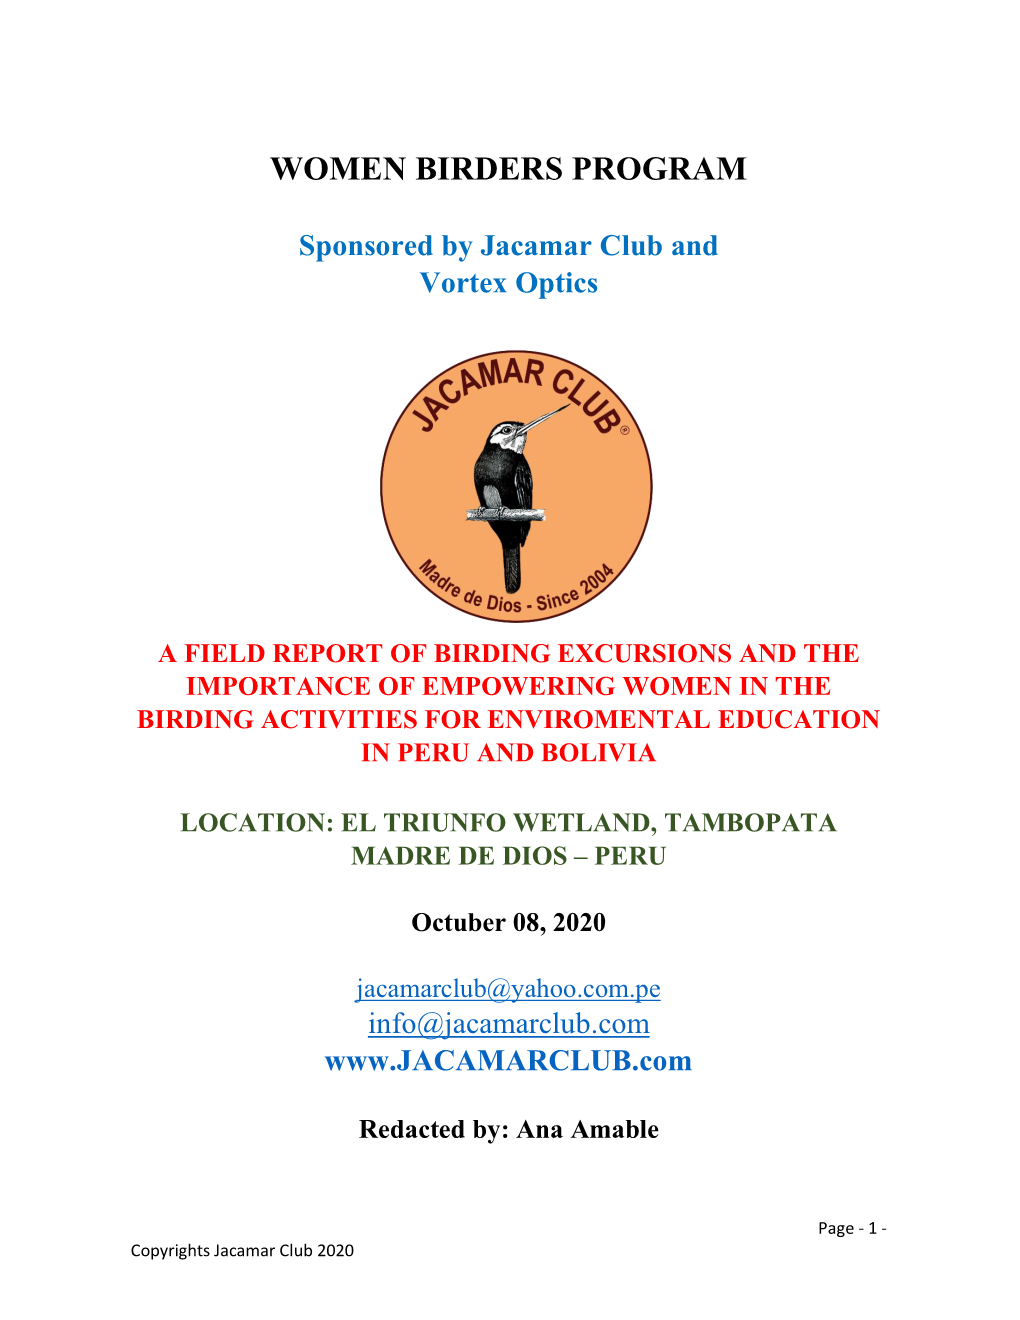 Women Birders Program